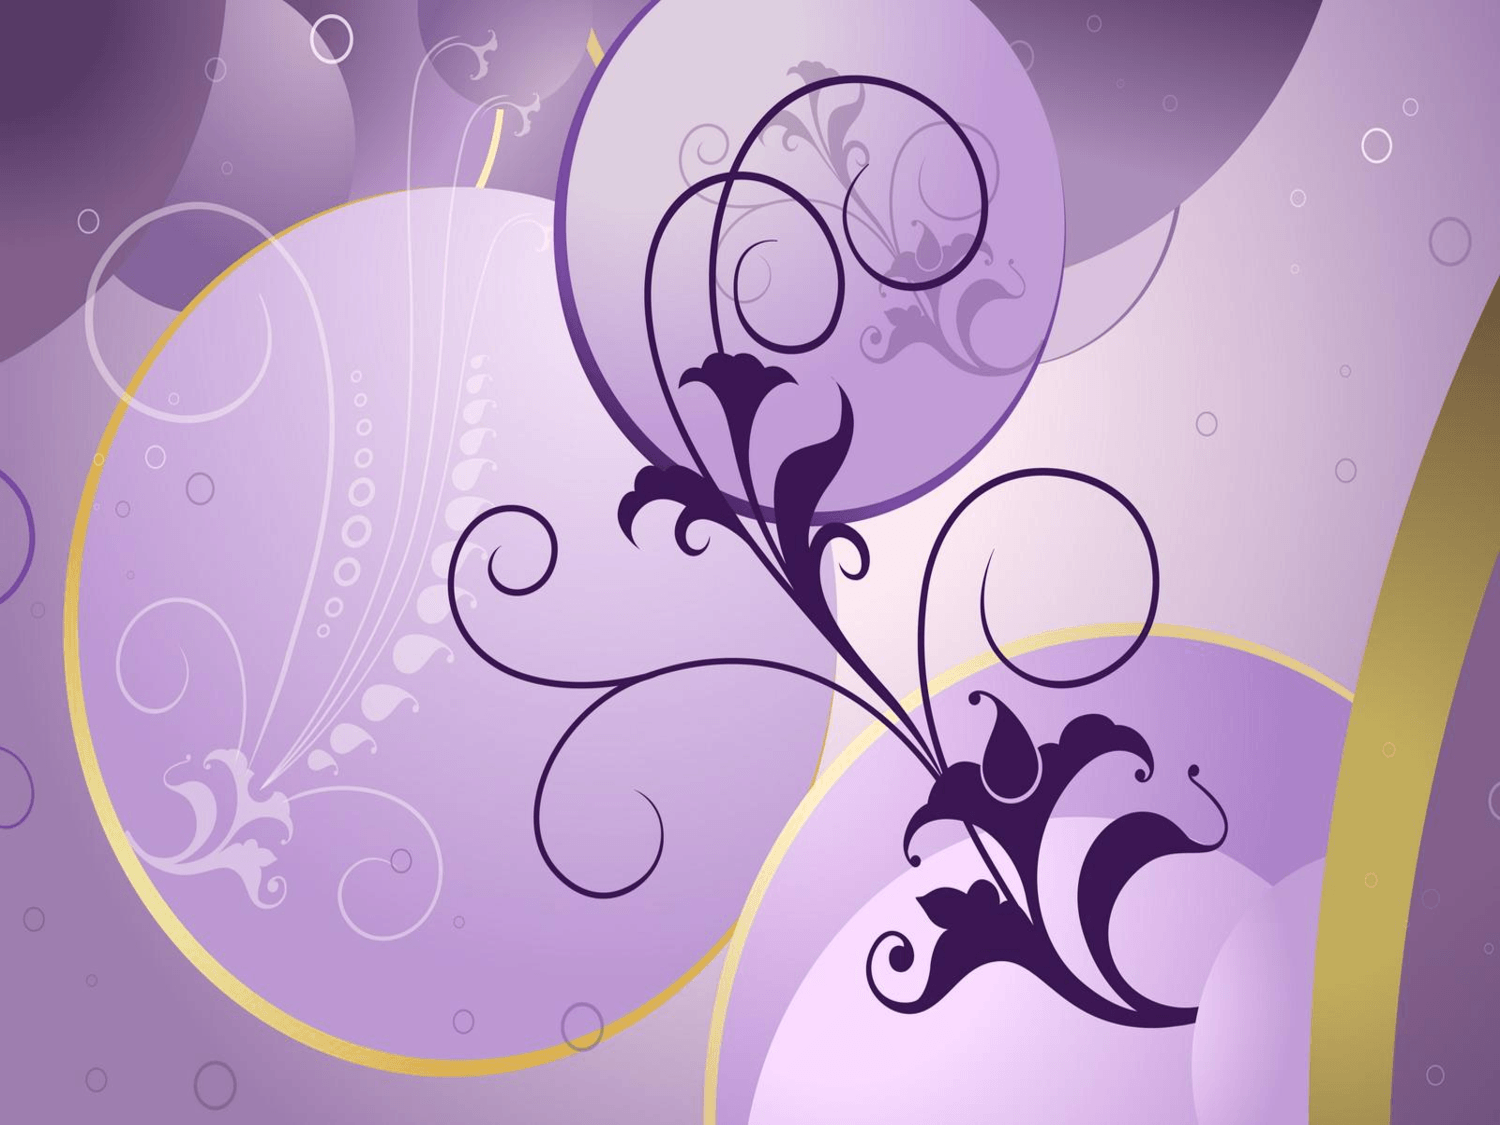 image For > Purple Swirl Background